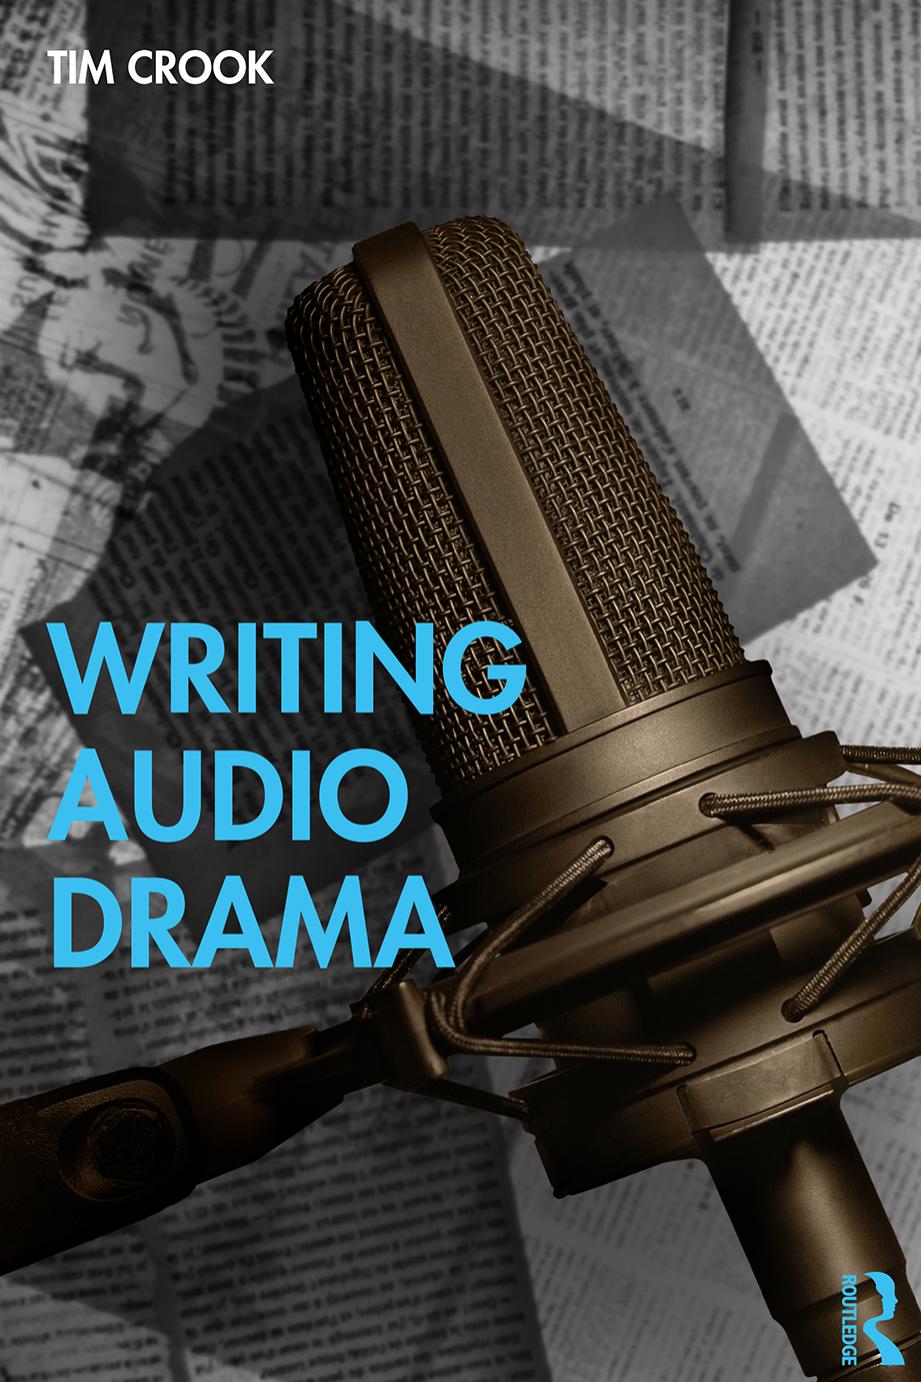 Writing Audio Drama by Tim Crook